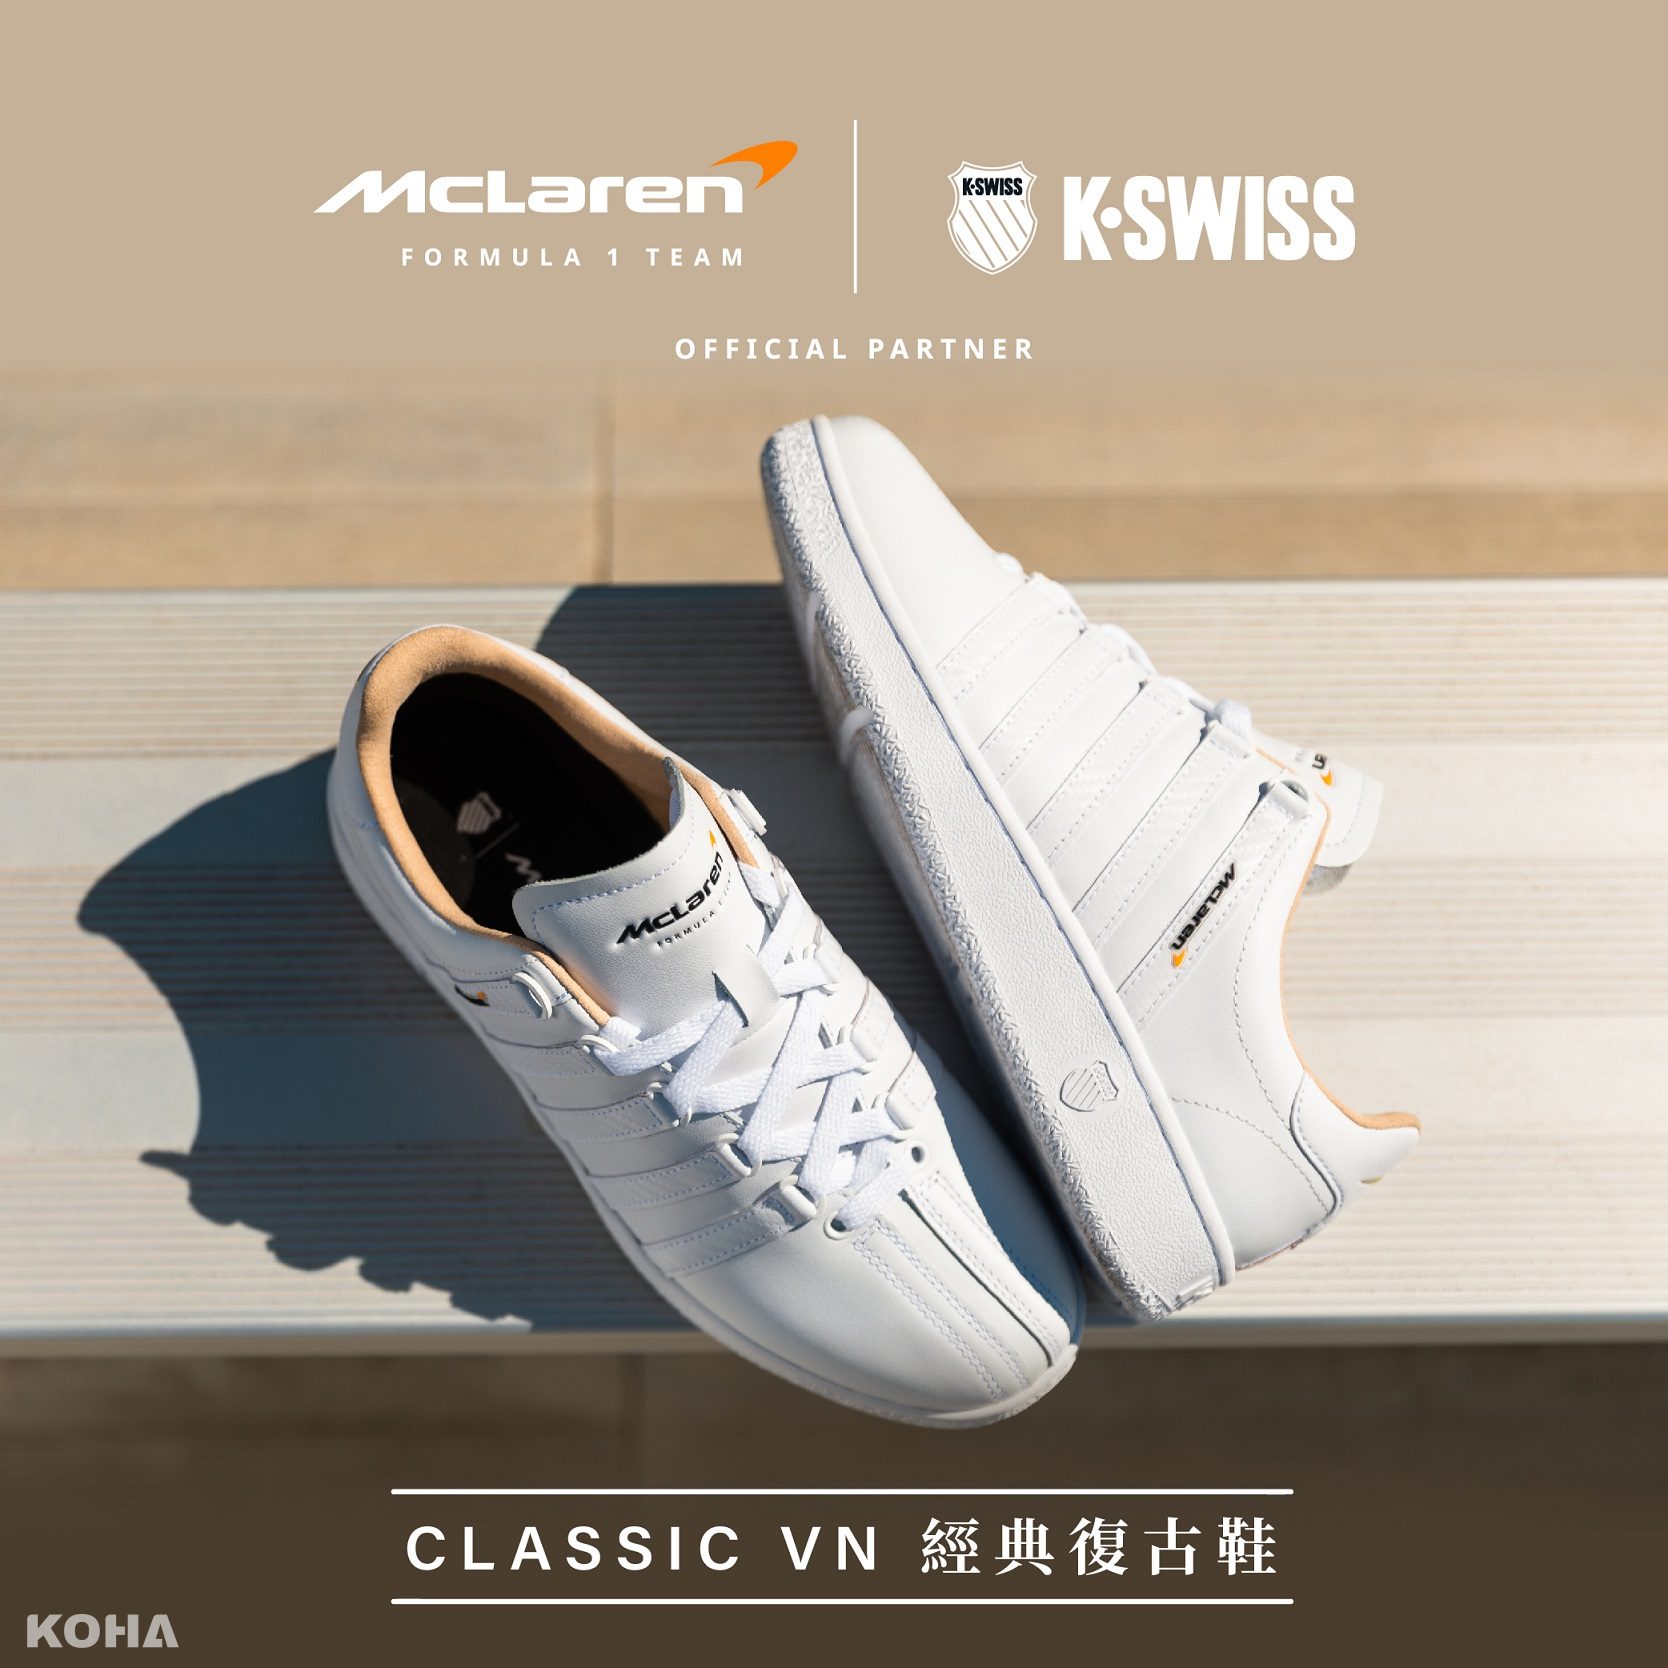 Classic VN復古鞋是K SWISS全球第一款全皮質網球鞋「The Classic」的熱銷支線之一